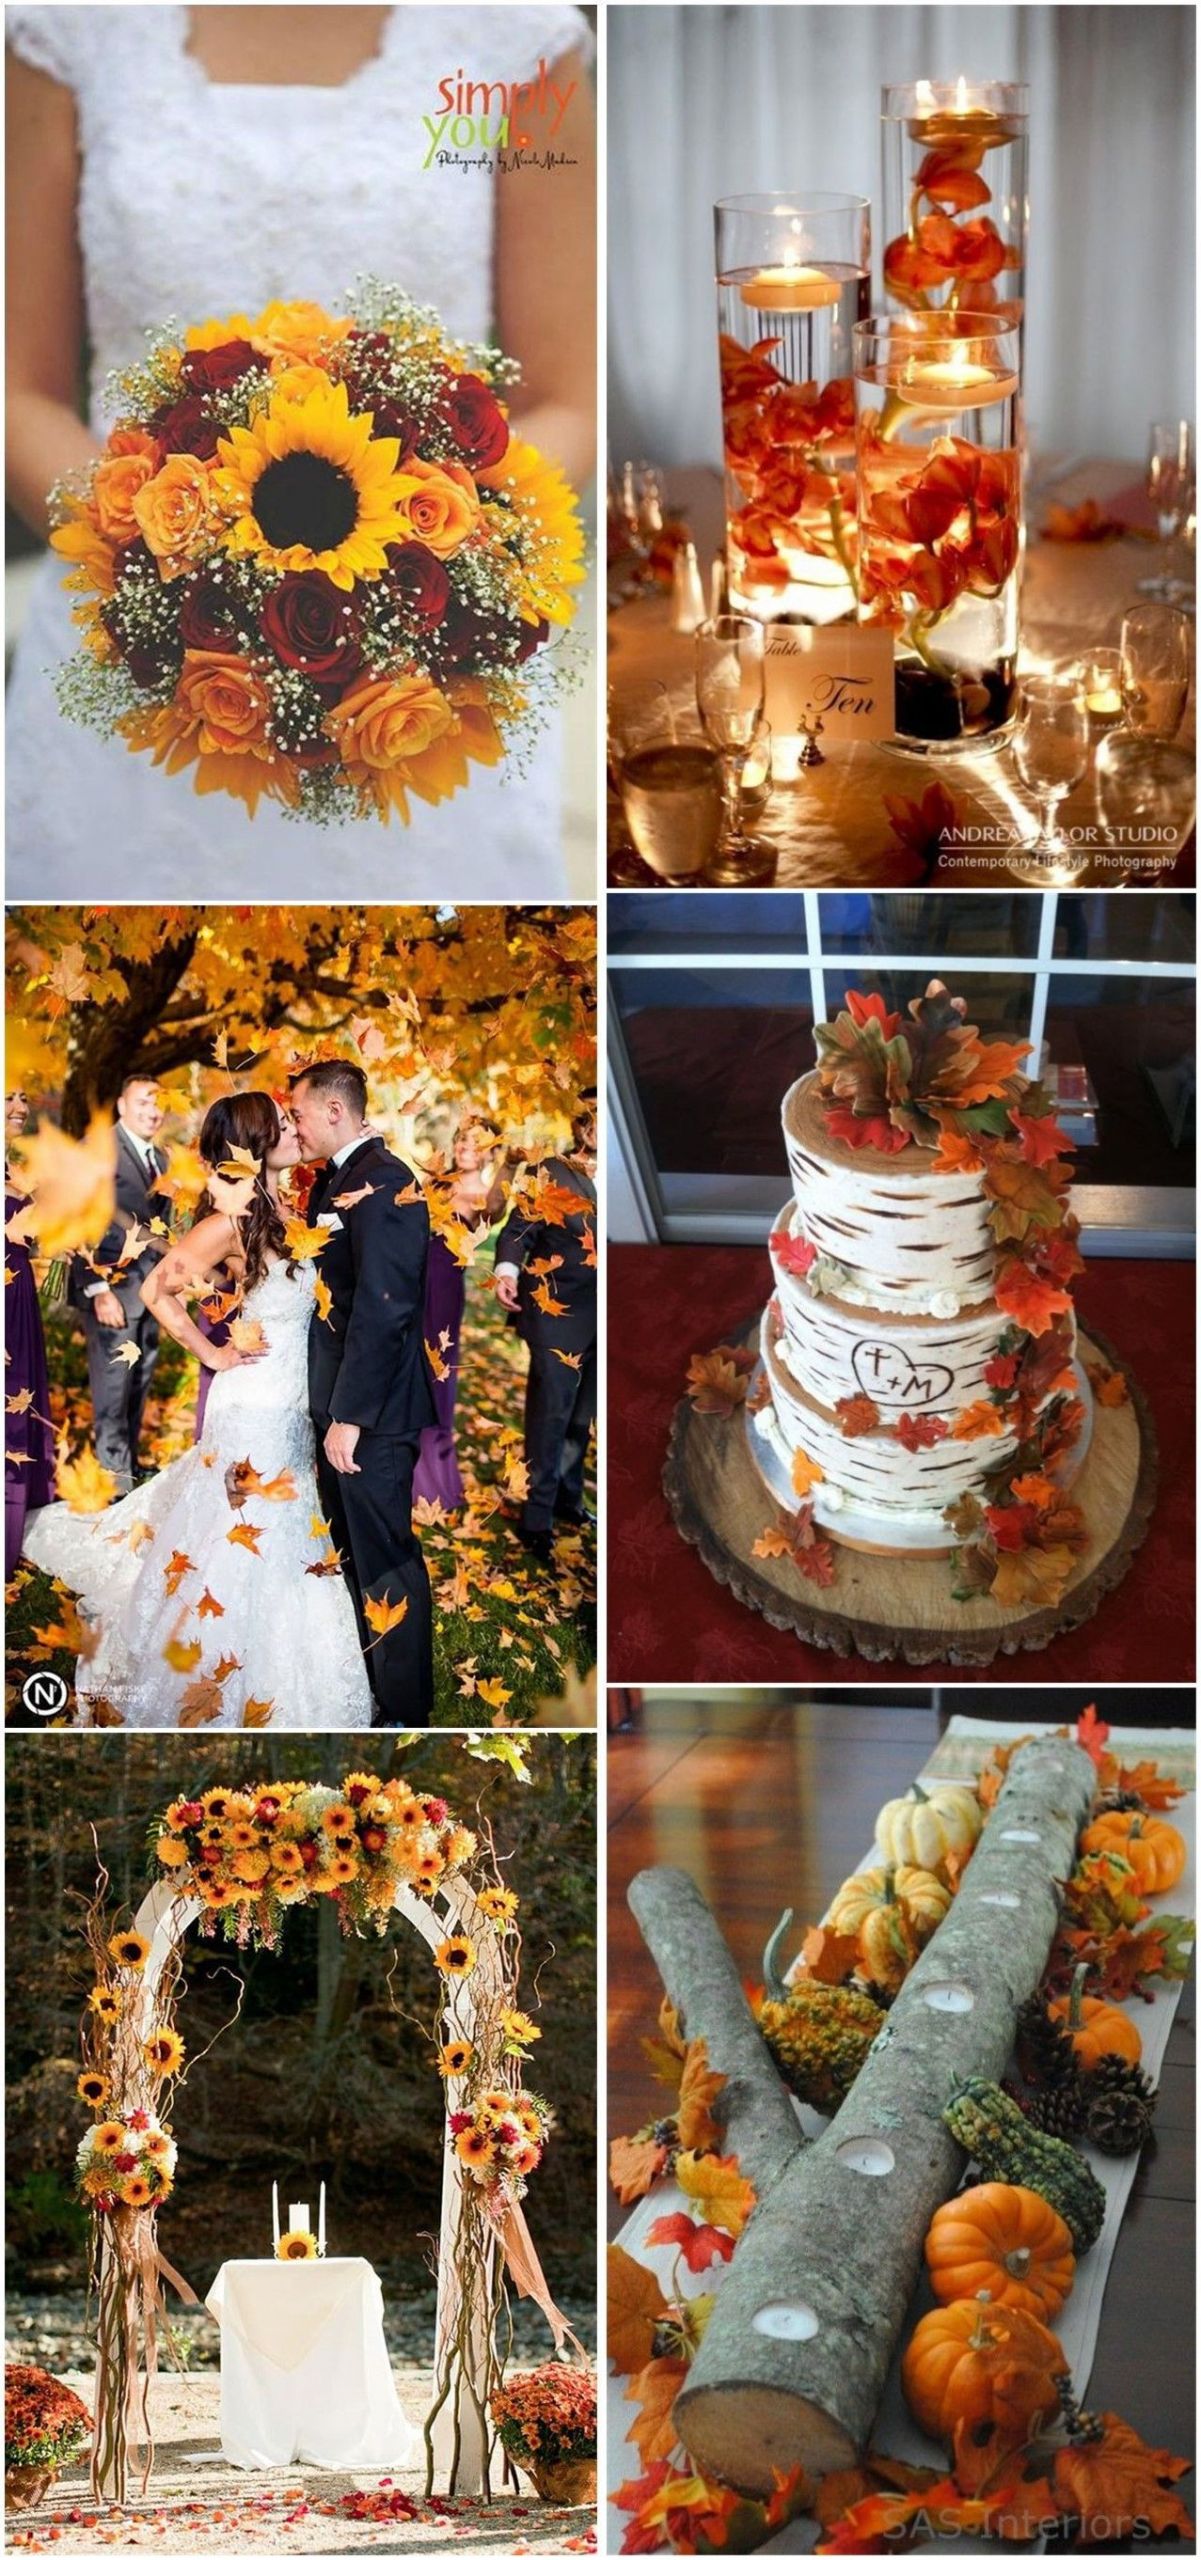 Autumn Weddings Ideas
 23 Best Fall Wedding Ideas in 2019